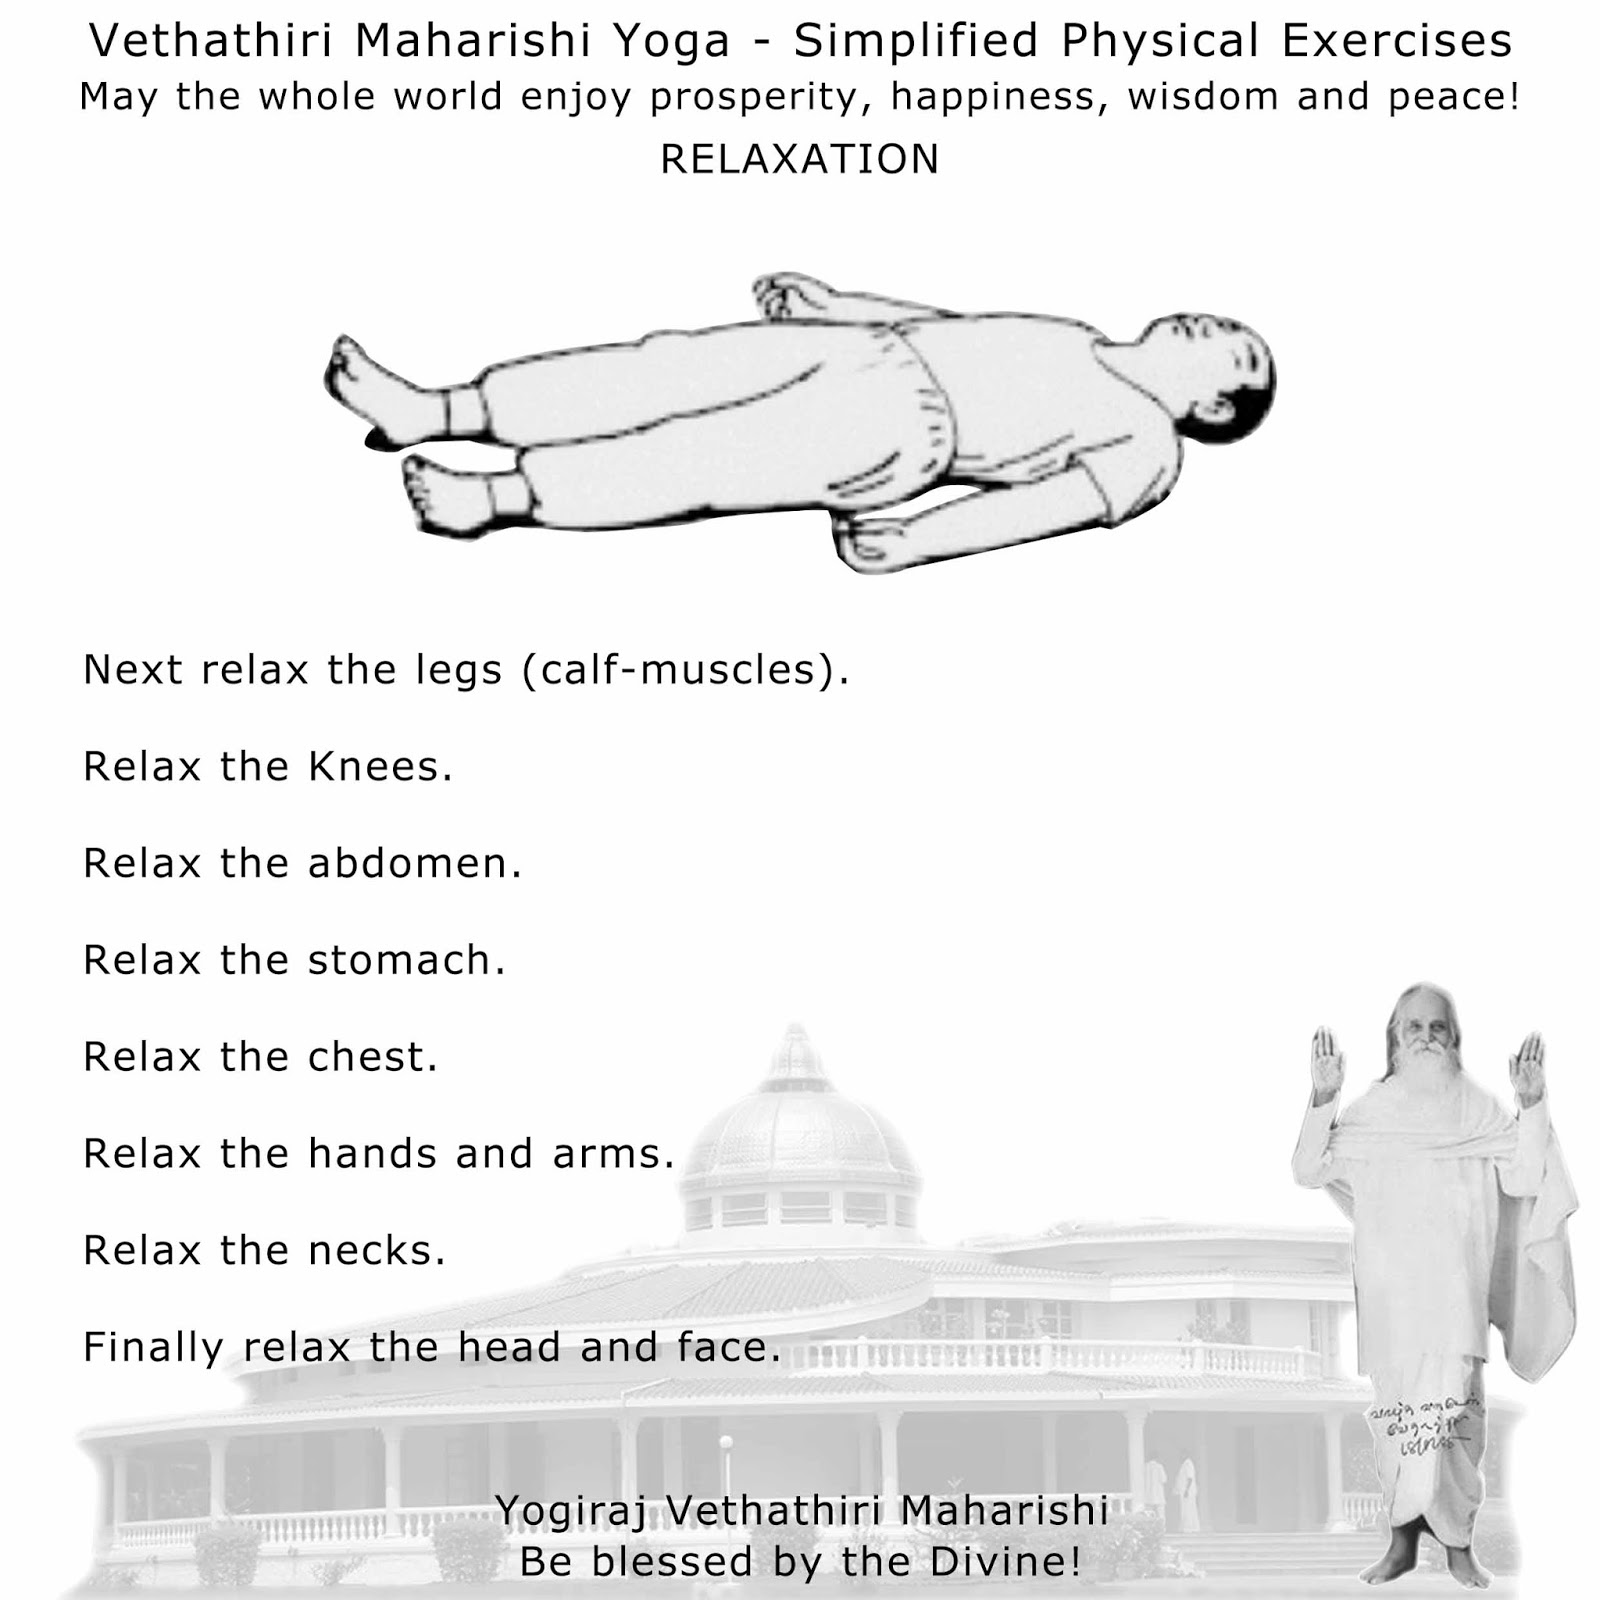 Vethathiri maharishi exercise book pdf